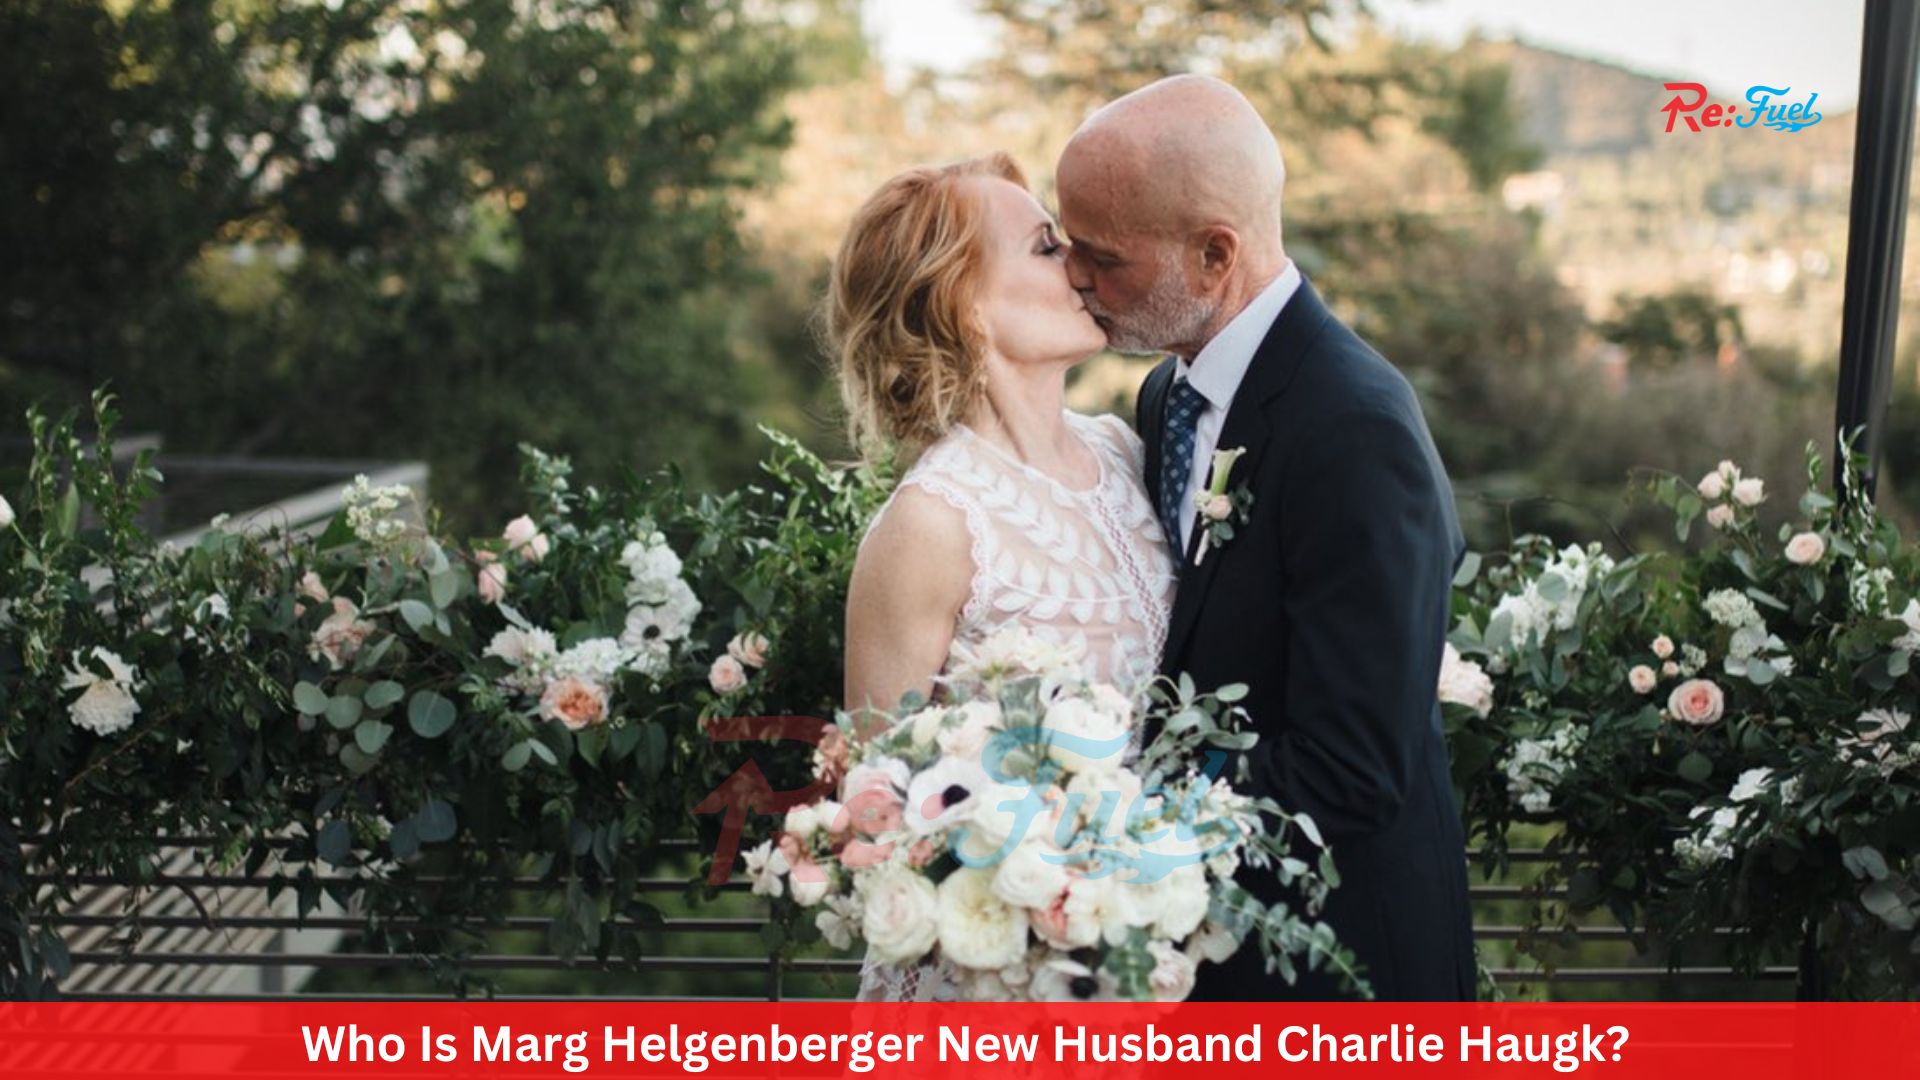 Who Is Marg Helgenberger New Husband Charlie Haugk?